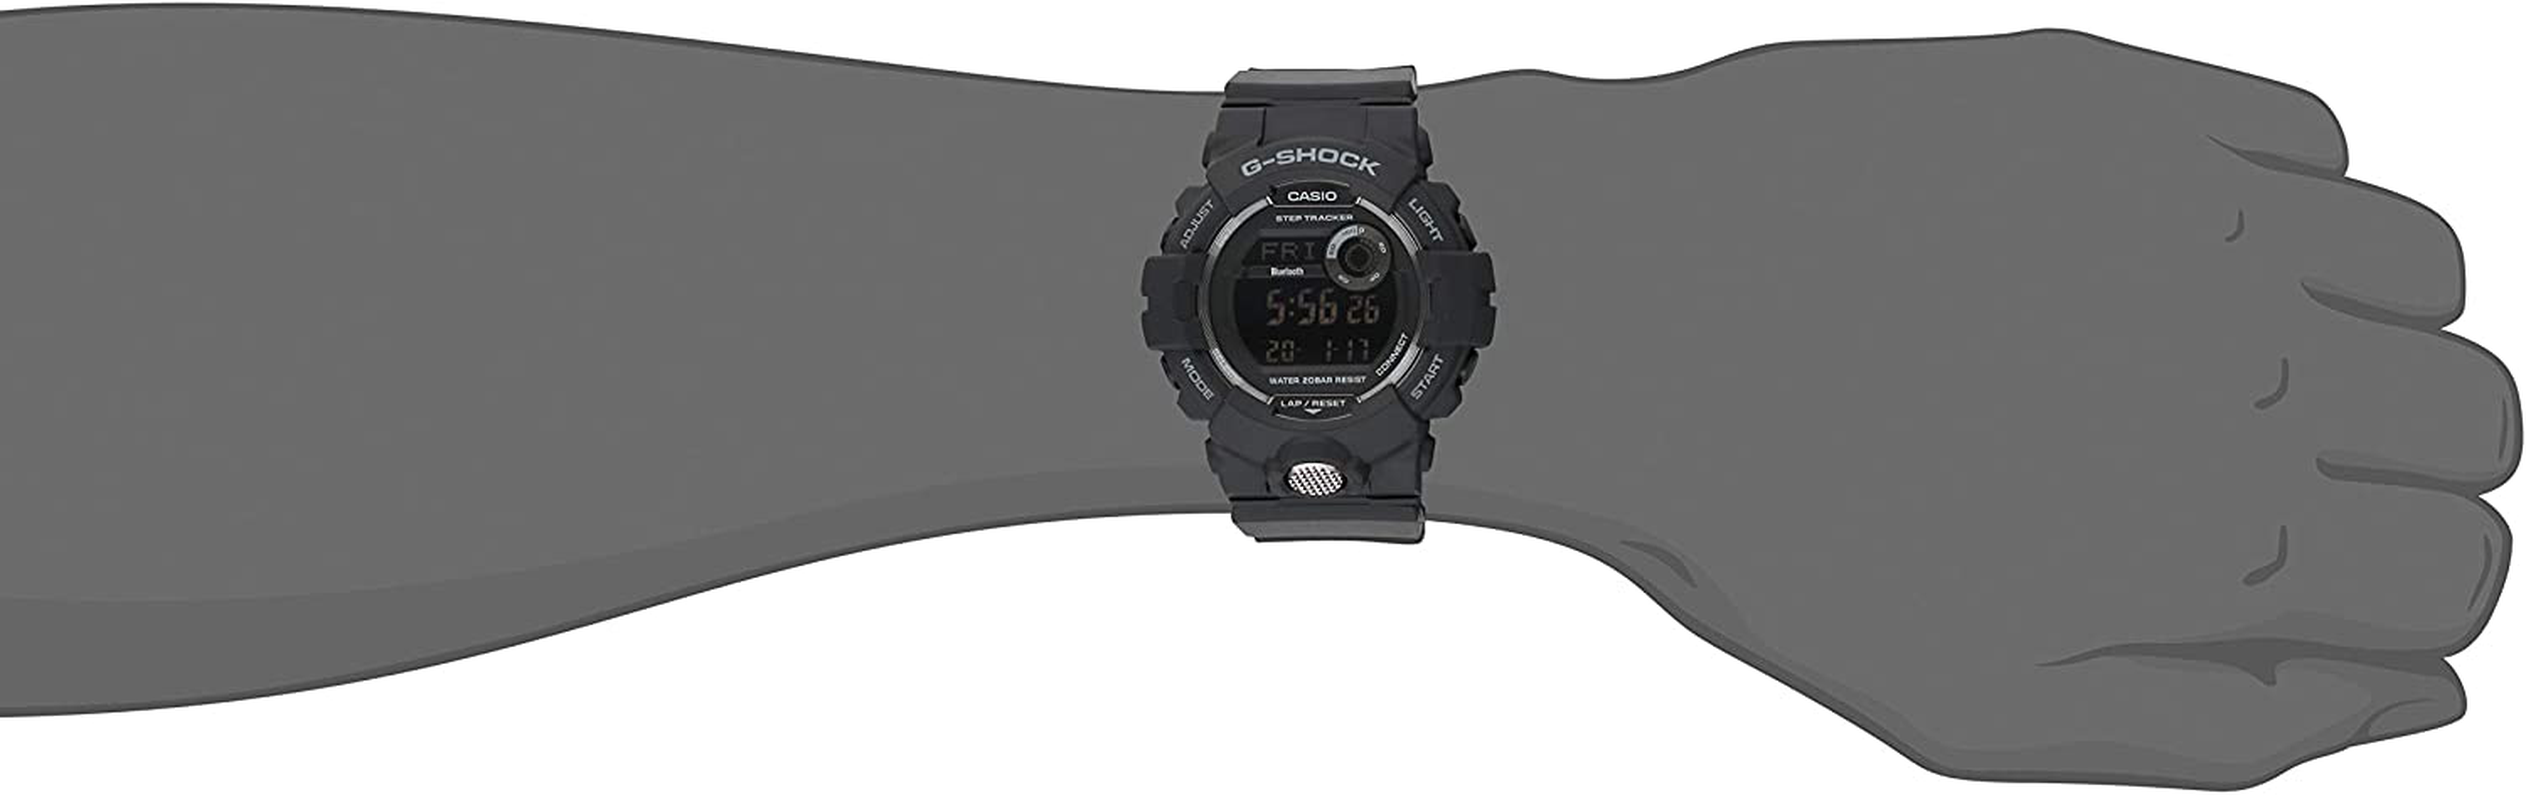 G-Shock GBD-800-1BCR Black One Size